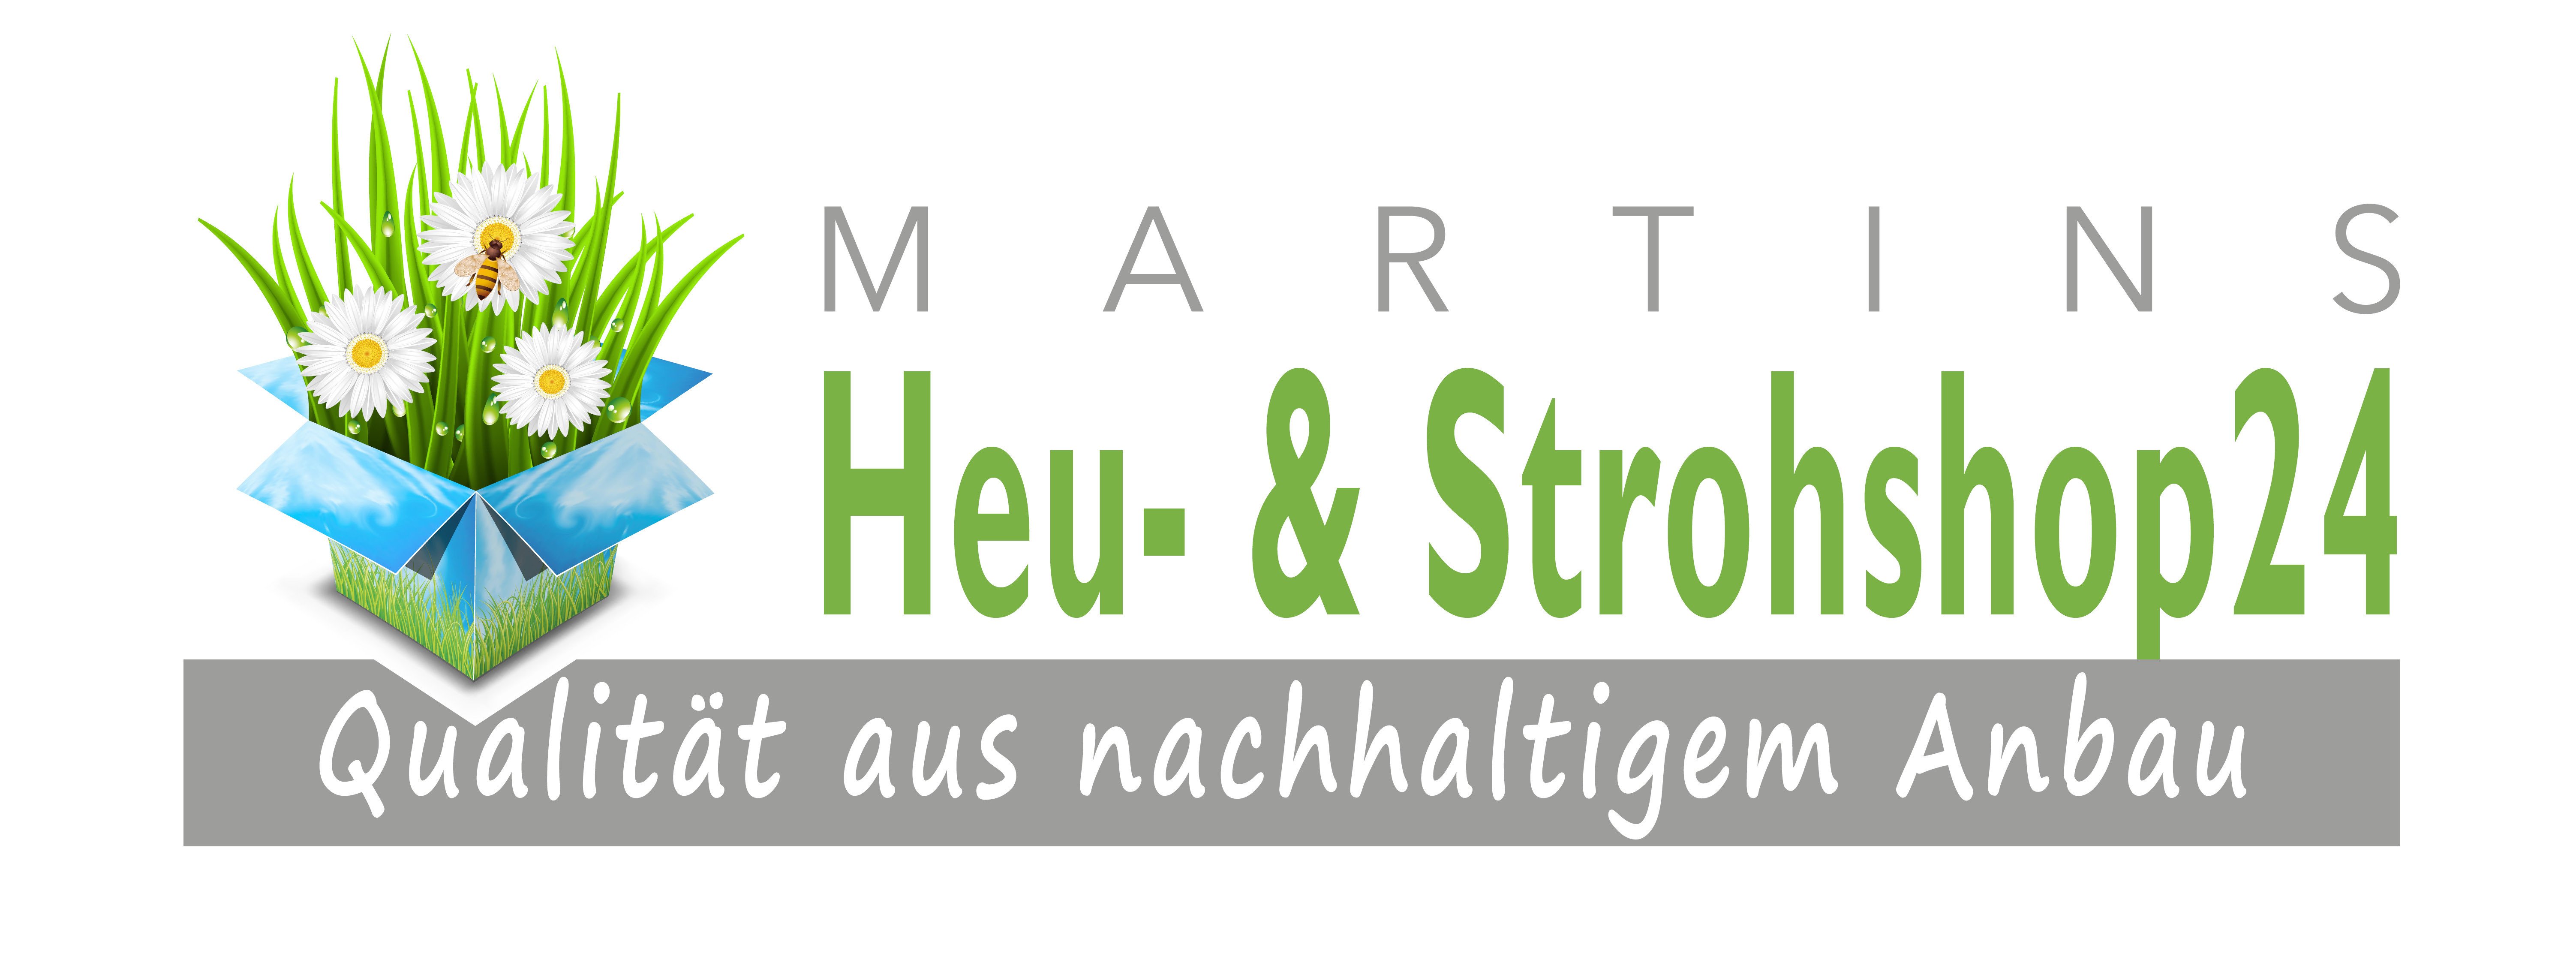 MARTINS Heu- & Strohshop24